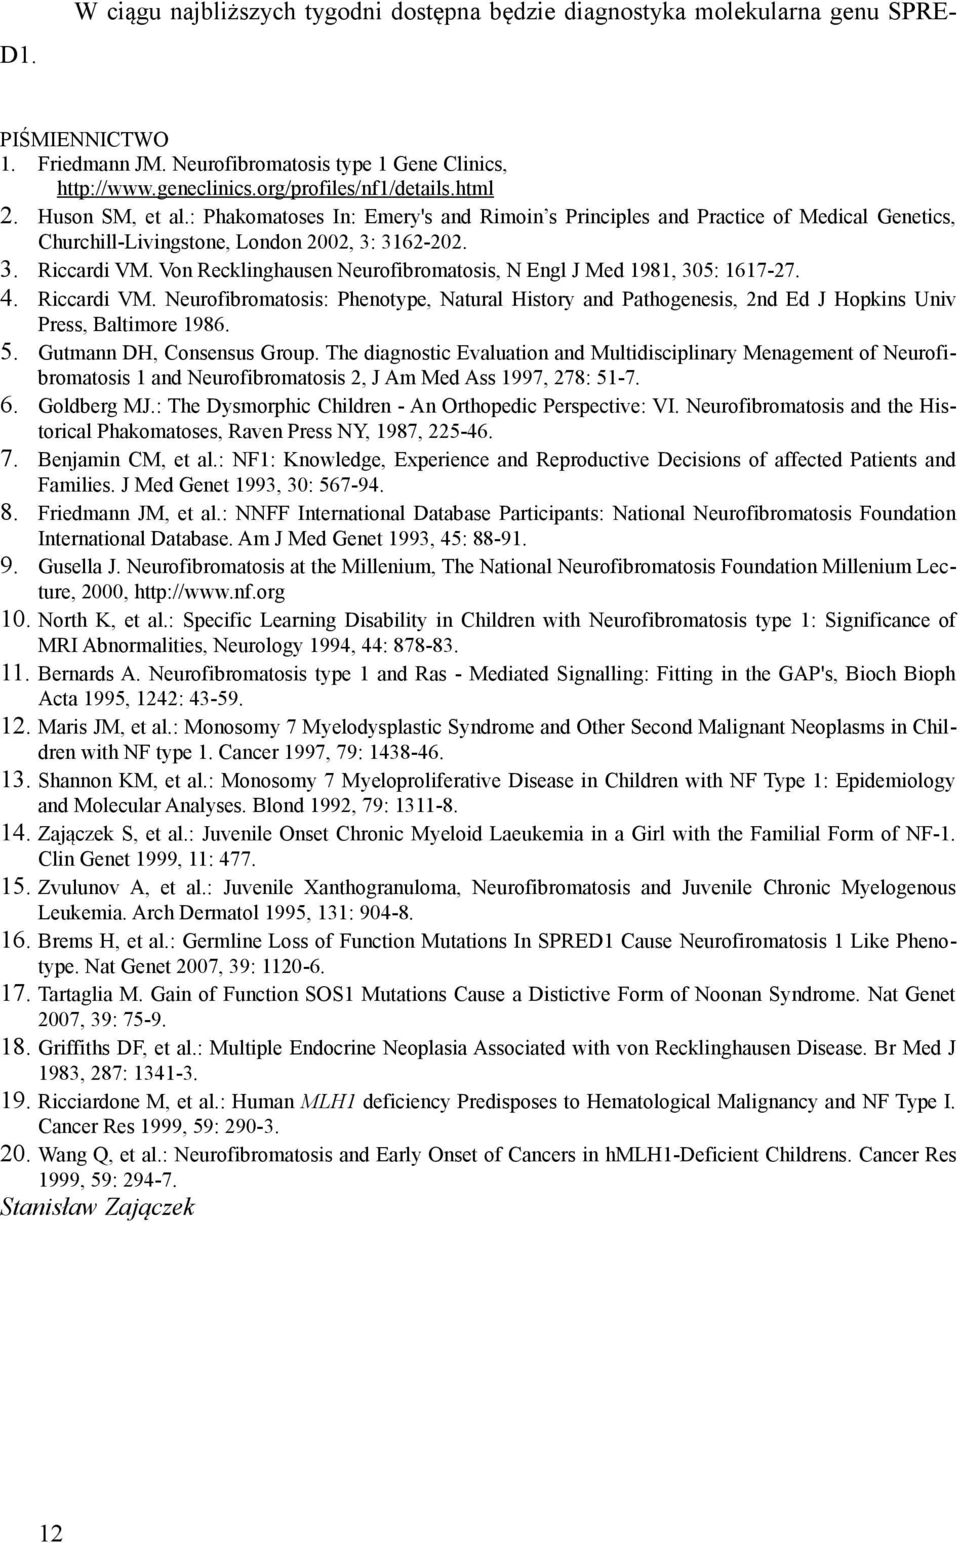 Von Recklinghausen Neurofibromatosis, N Engl J Med 1981, 305: 1617-27. 4. Riccardi VM. Neurofibromatosis: Phenotype, Natural History and Pathogenesis, 2nd Ed J Hopkins Univ Press, Baltimore 1986. 5.